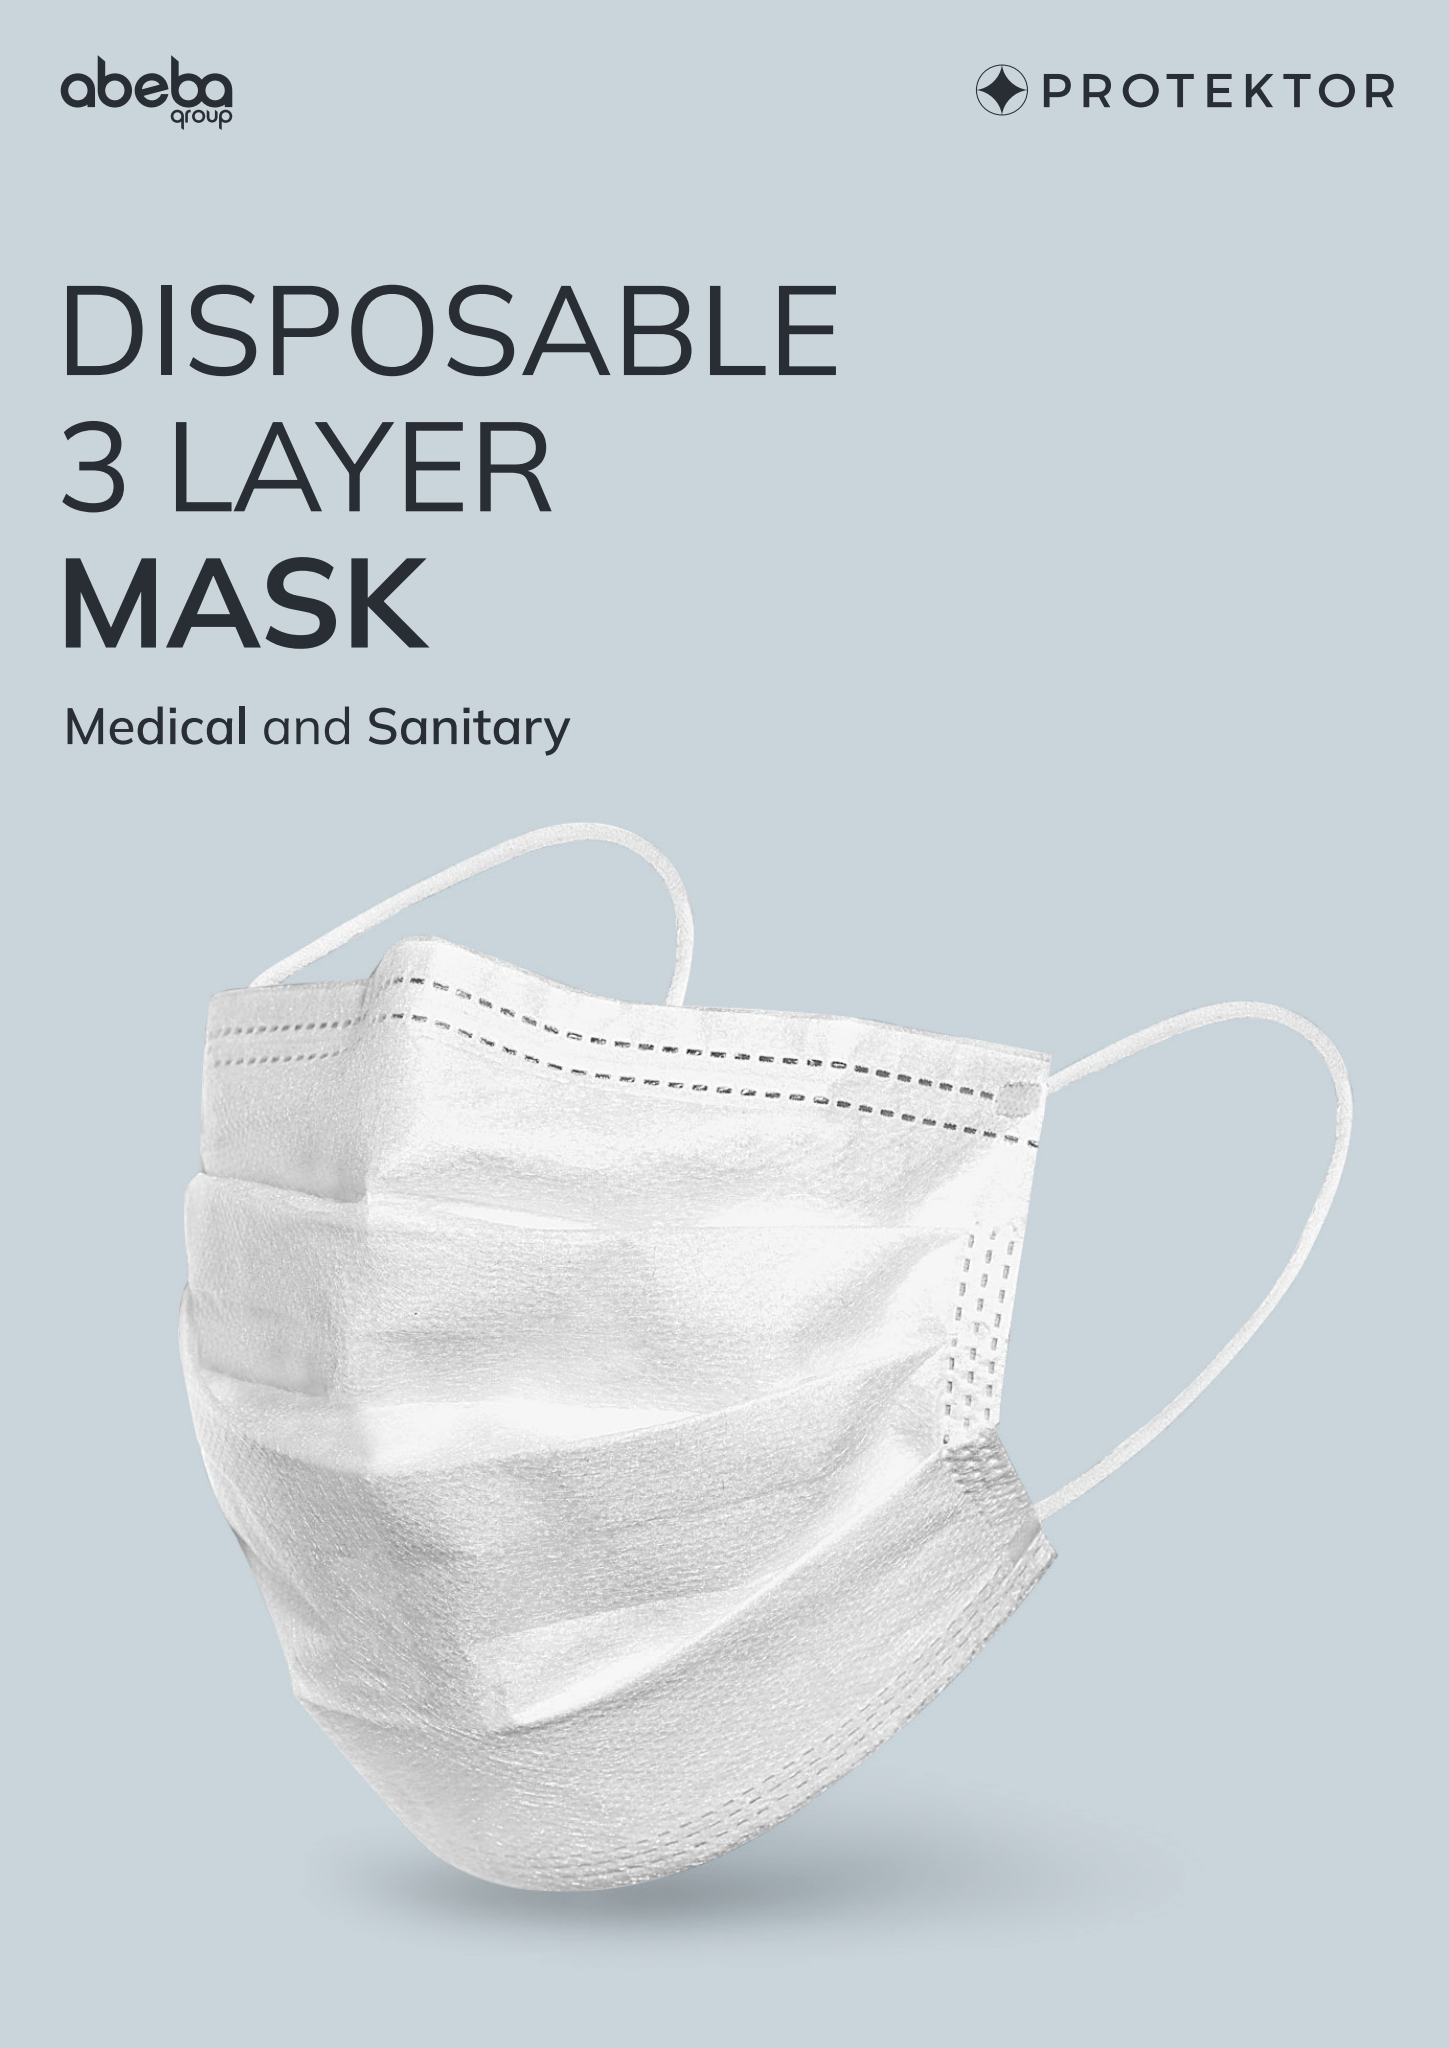 Medical and Sanitary Mask